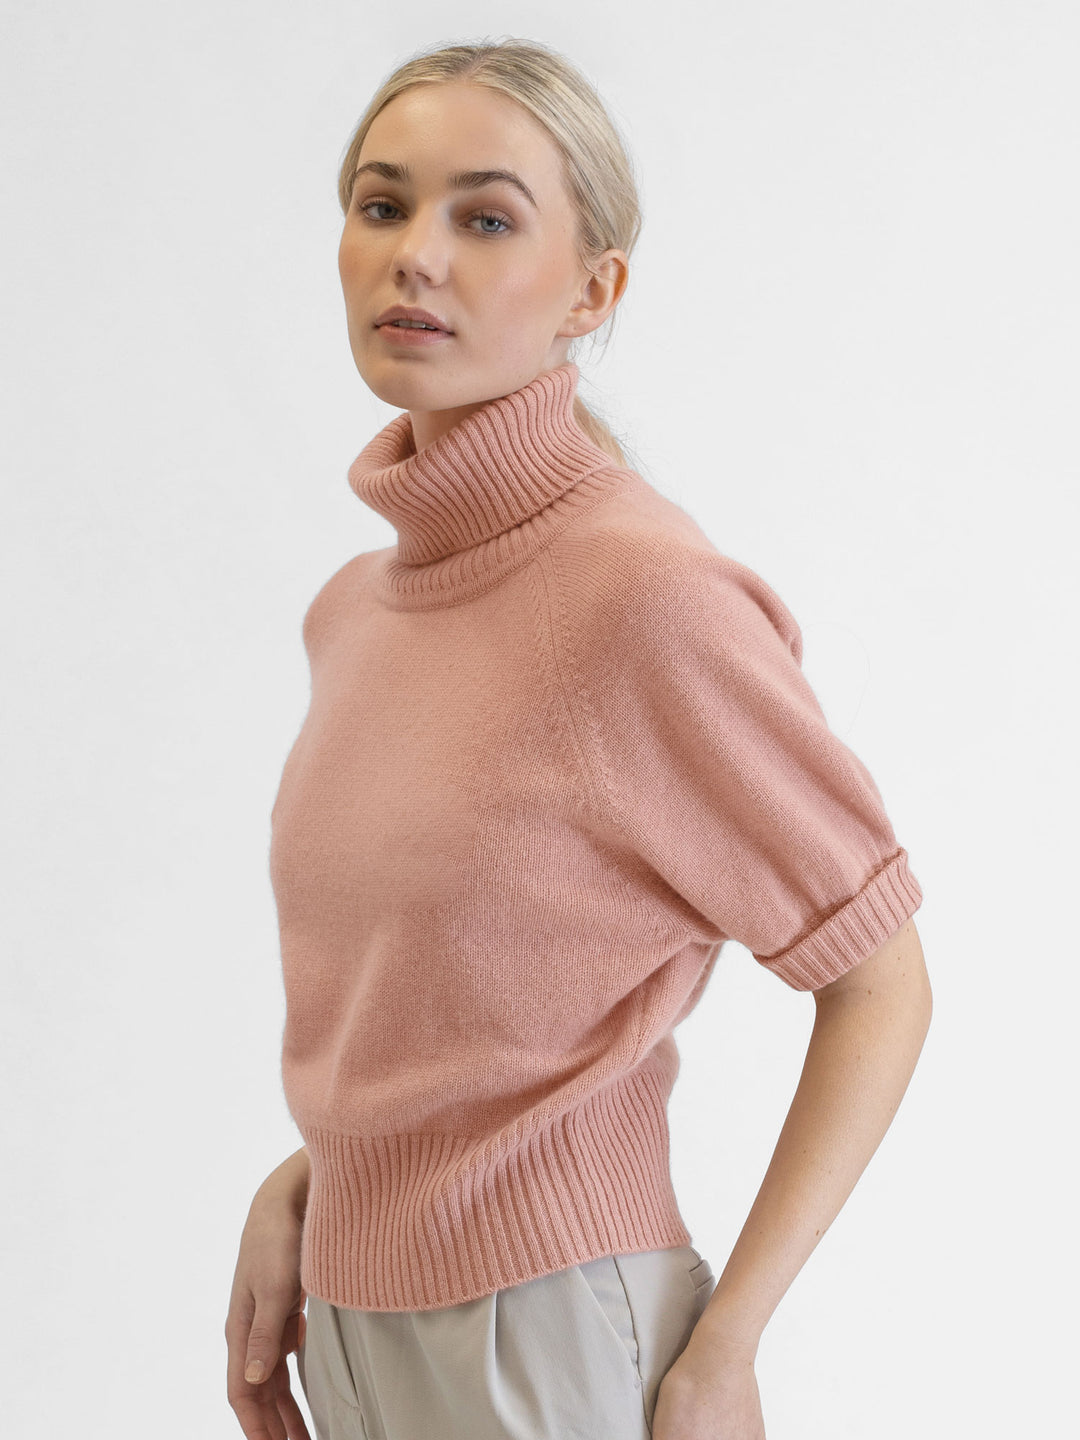 Short sleeved turtle neck cashmere sweater. Color Peachy Pink. Scandinavian design by Kashmina